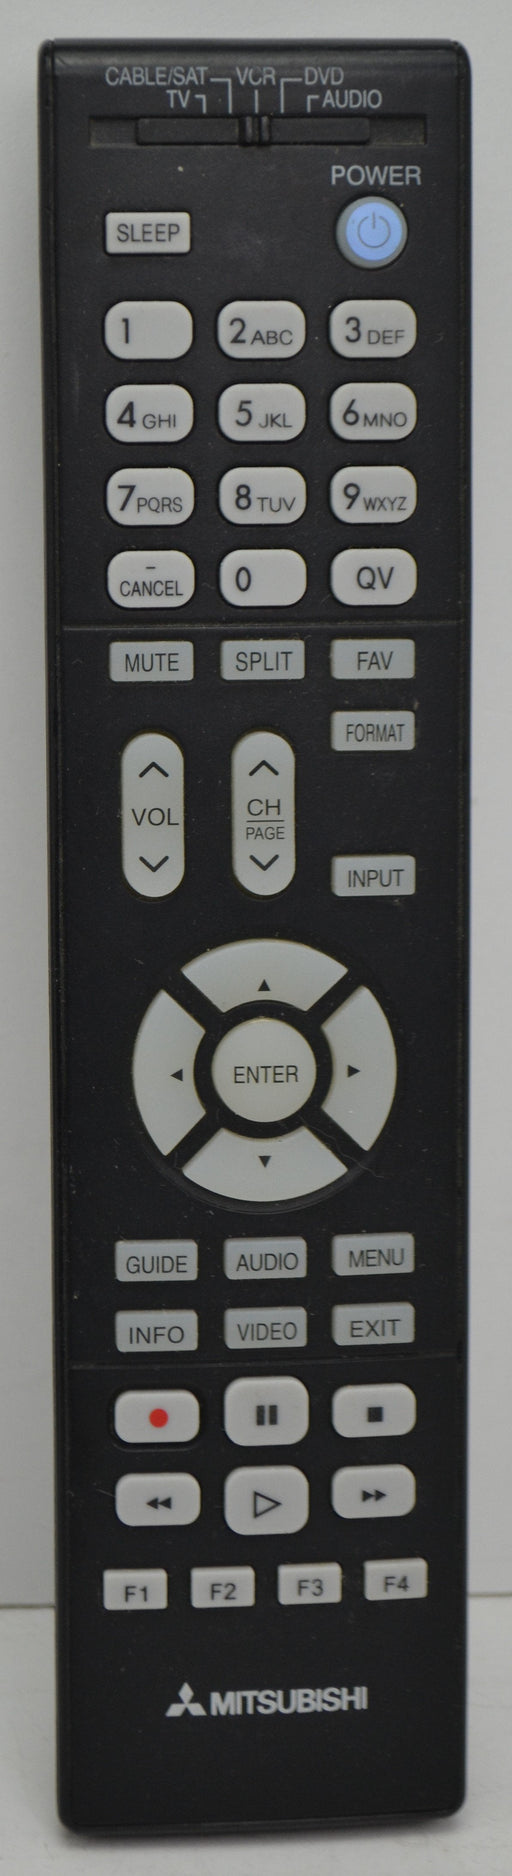 Mitsubishi Cable / TV / DVD / VCR / SAT Remote Control-Remote-SpenCertified-refurbished-vintage-electonics